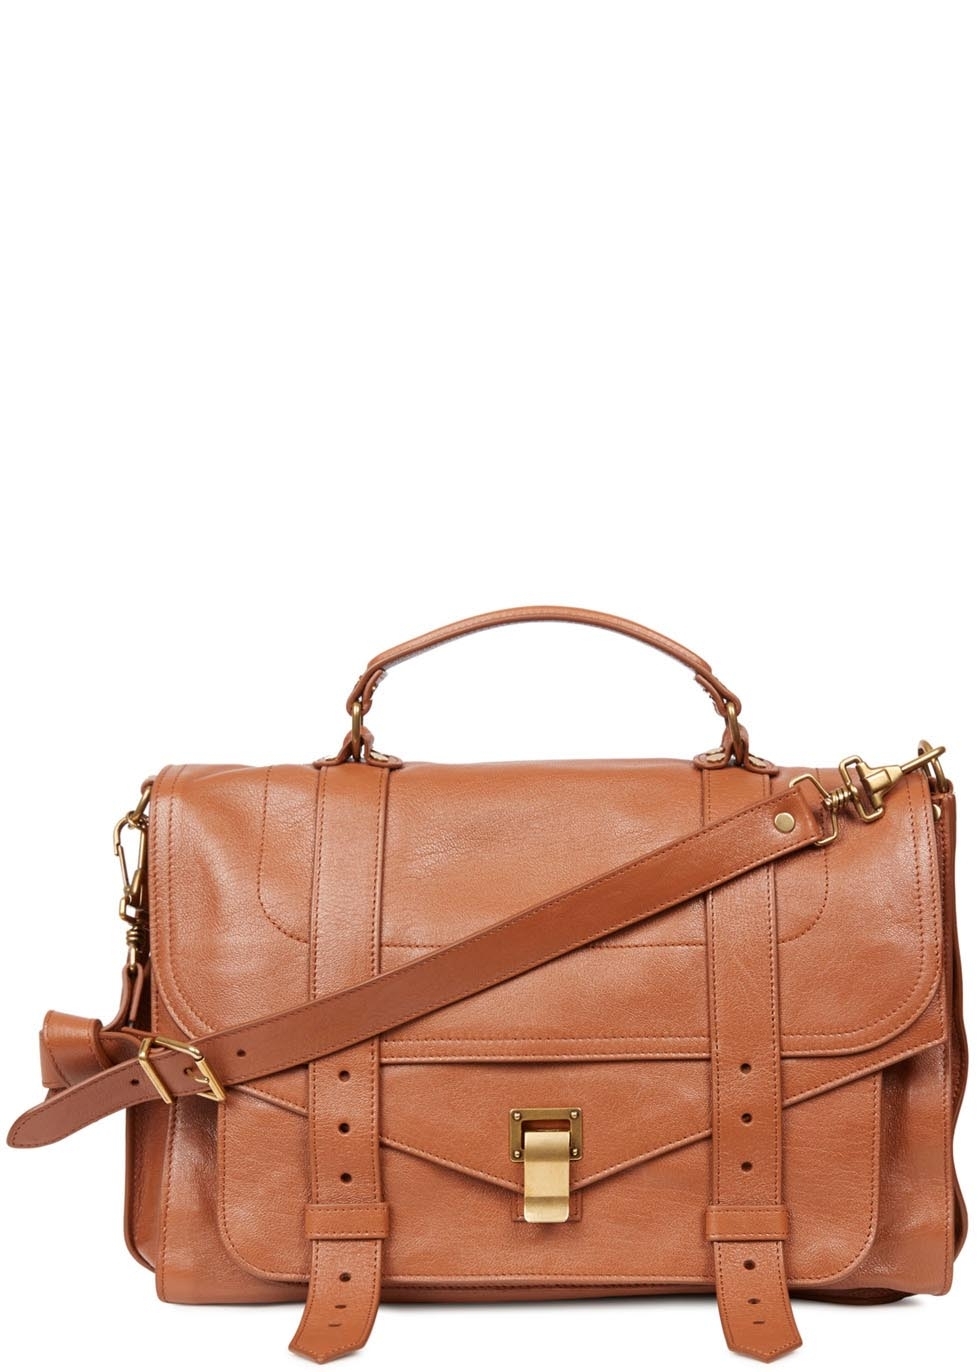 PS1 tan large leather satchel